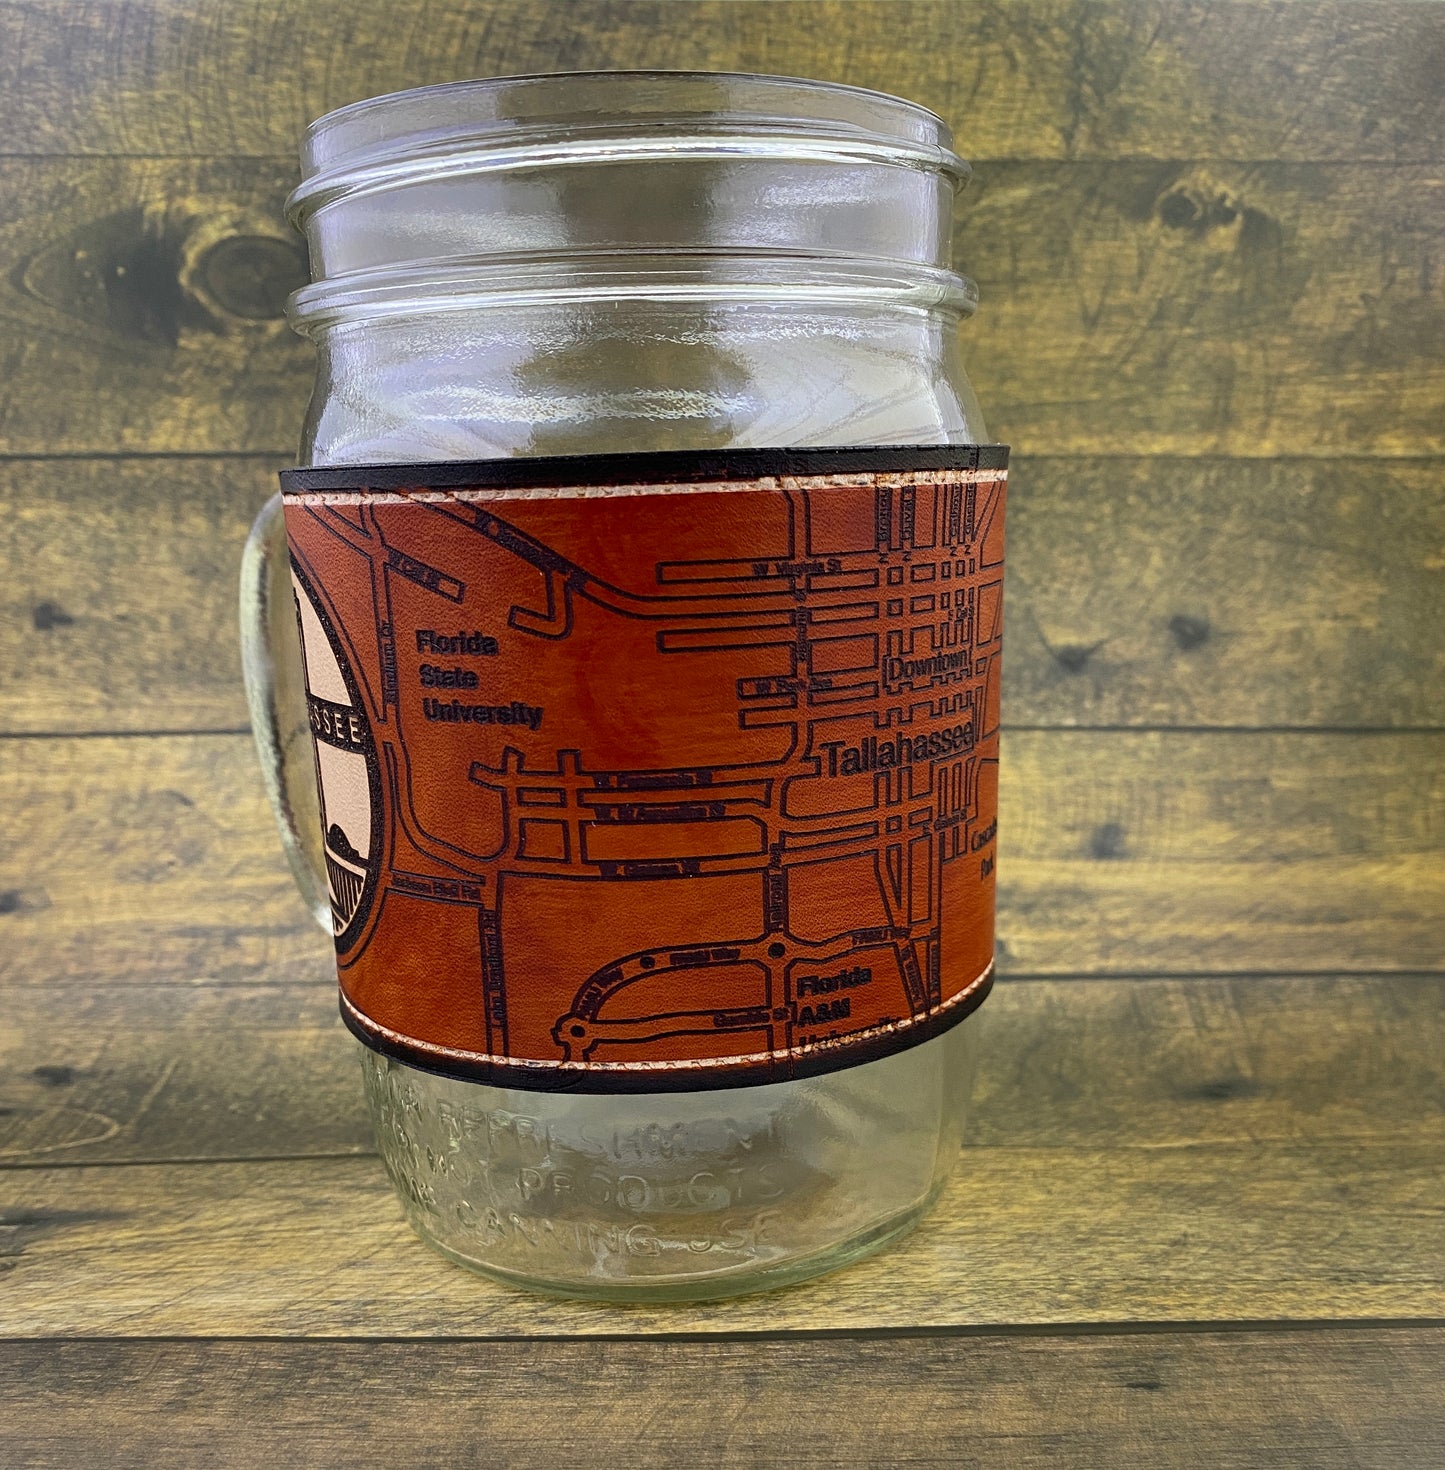 Mason Jar Wraps: Tallahassee Collection Logo